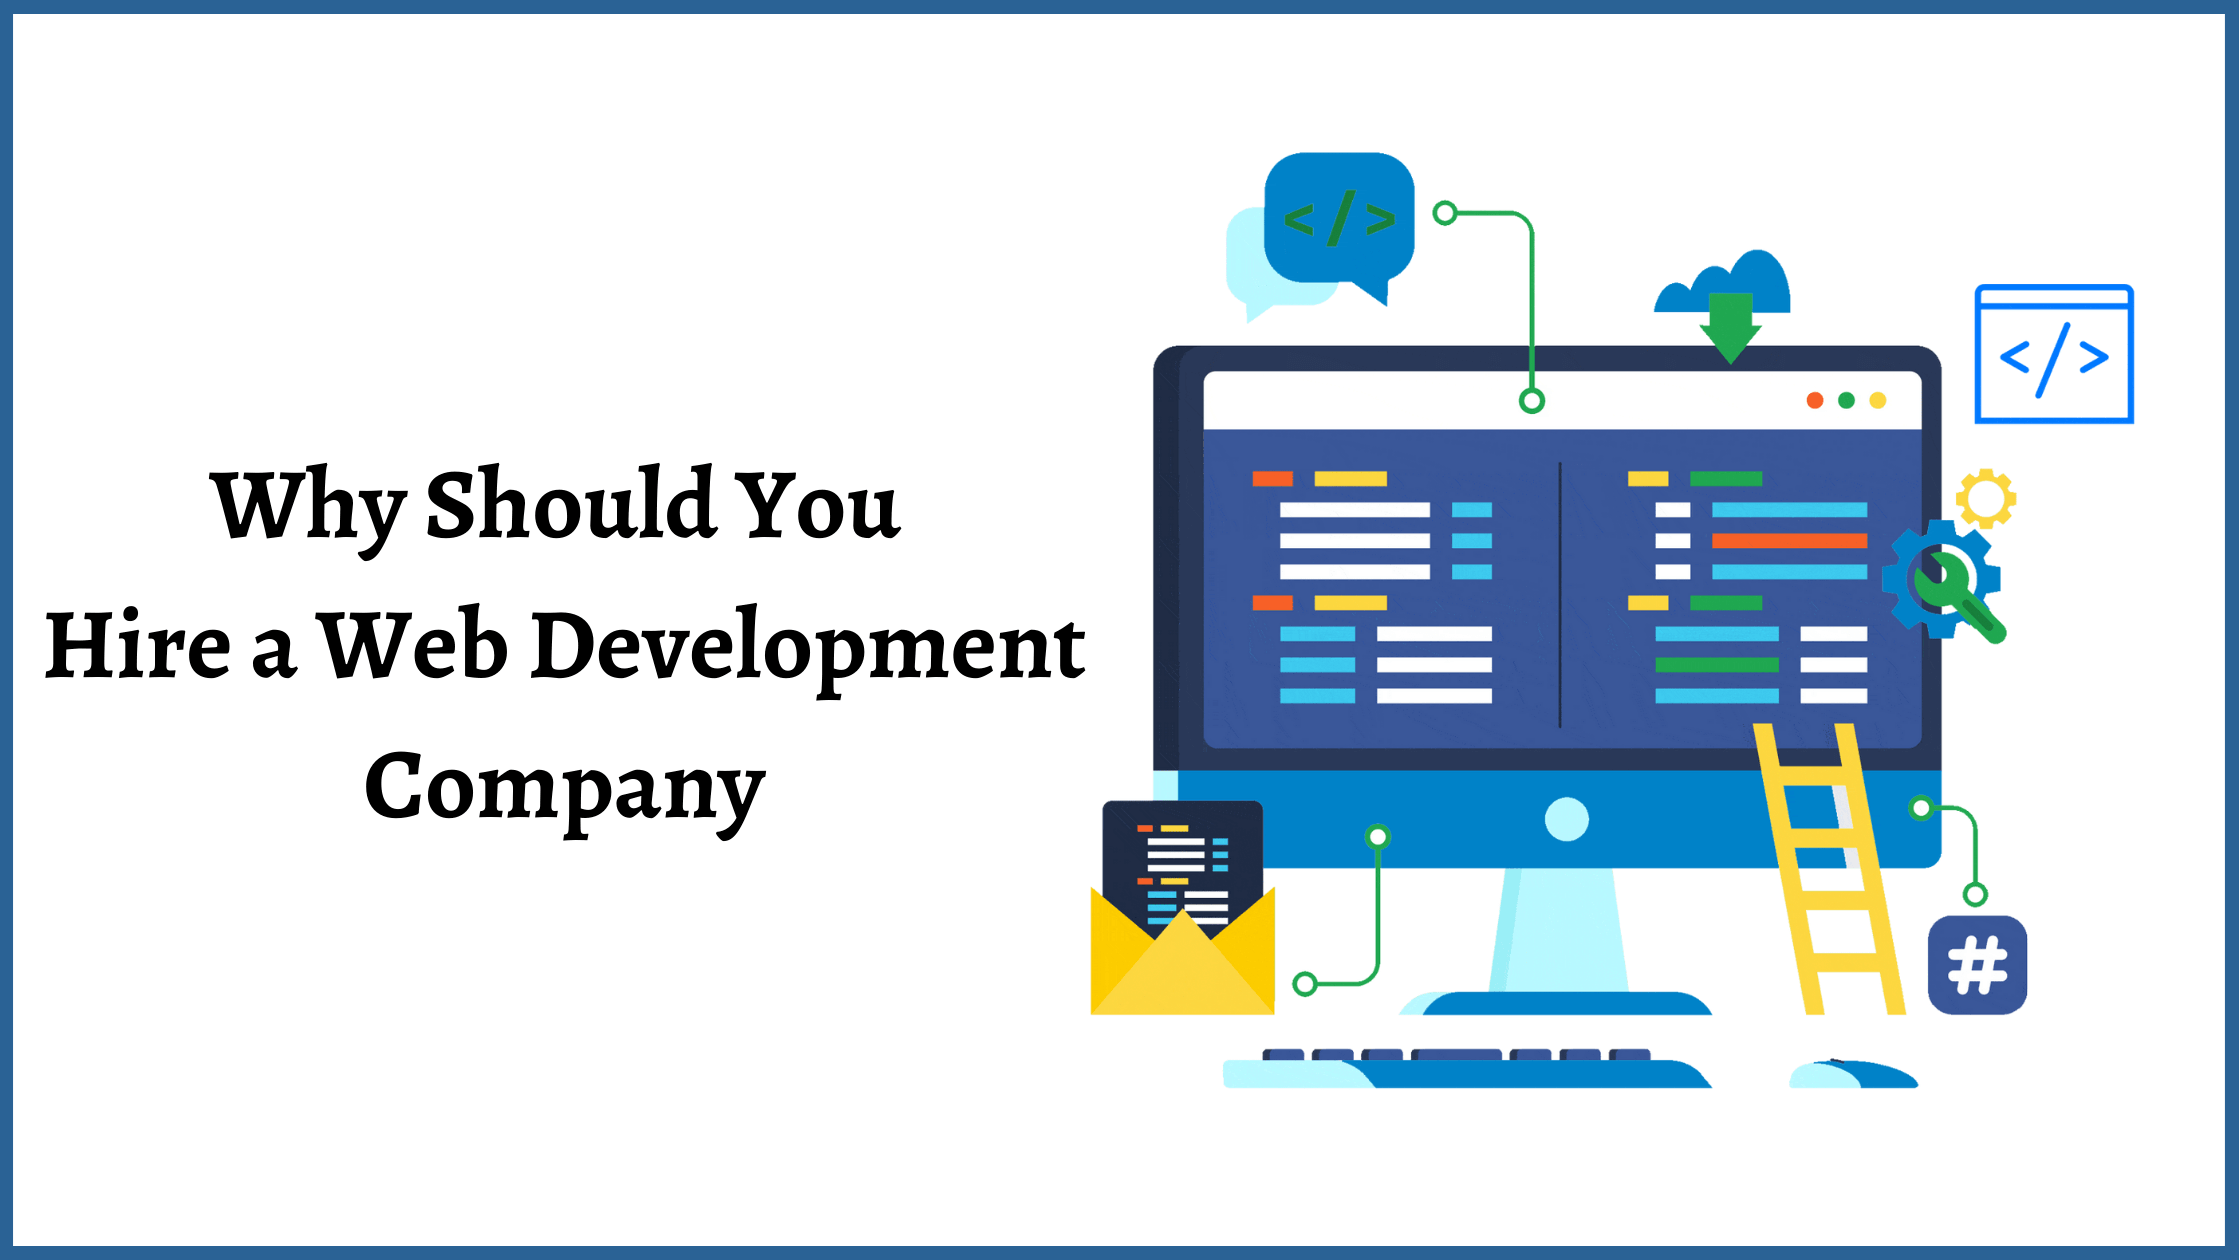 Why should you hire a web development company